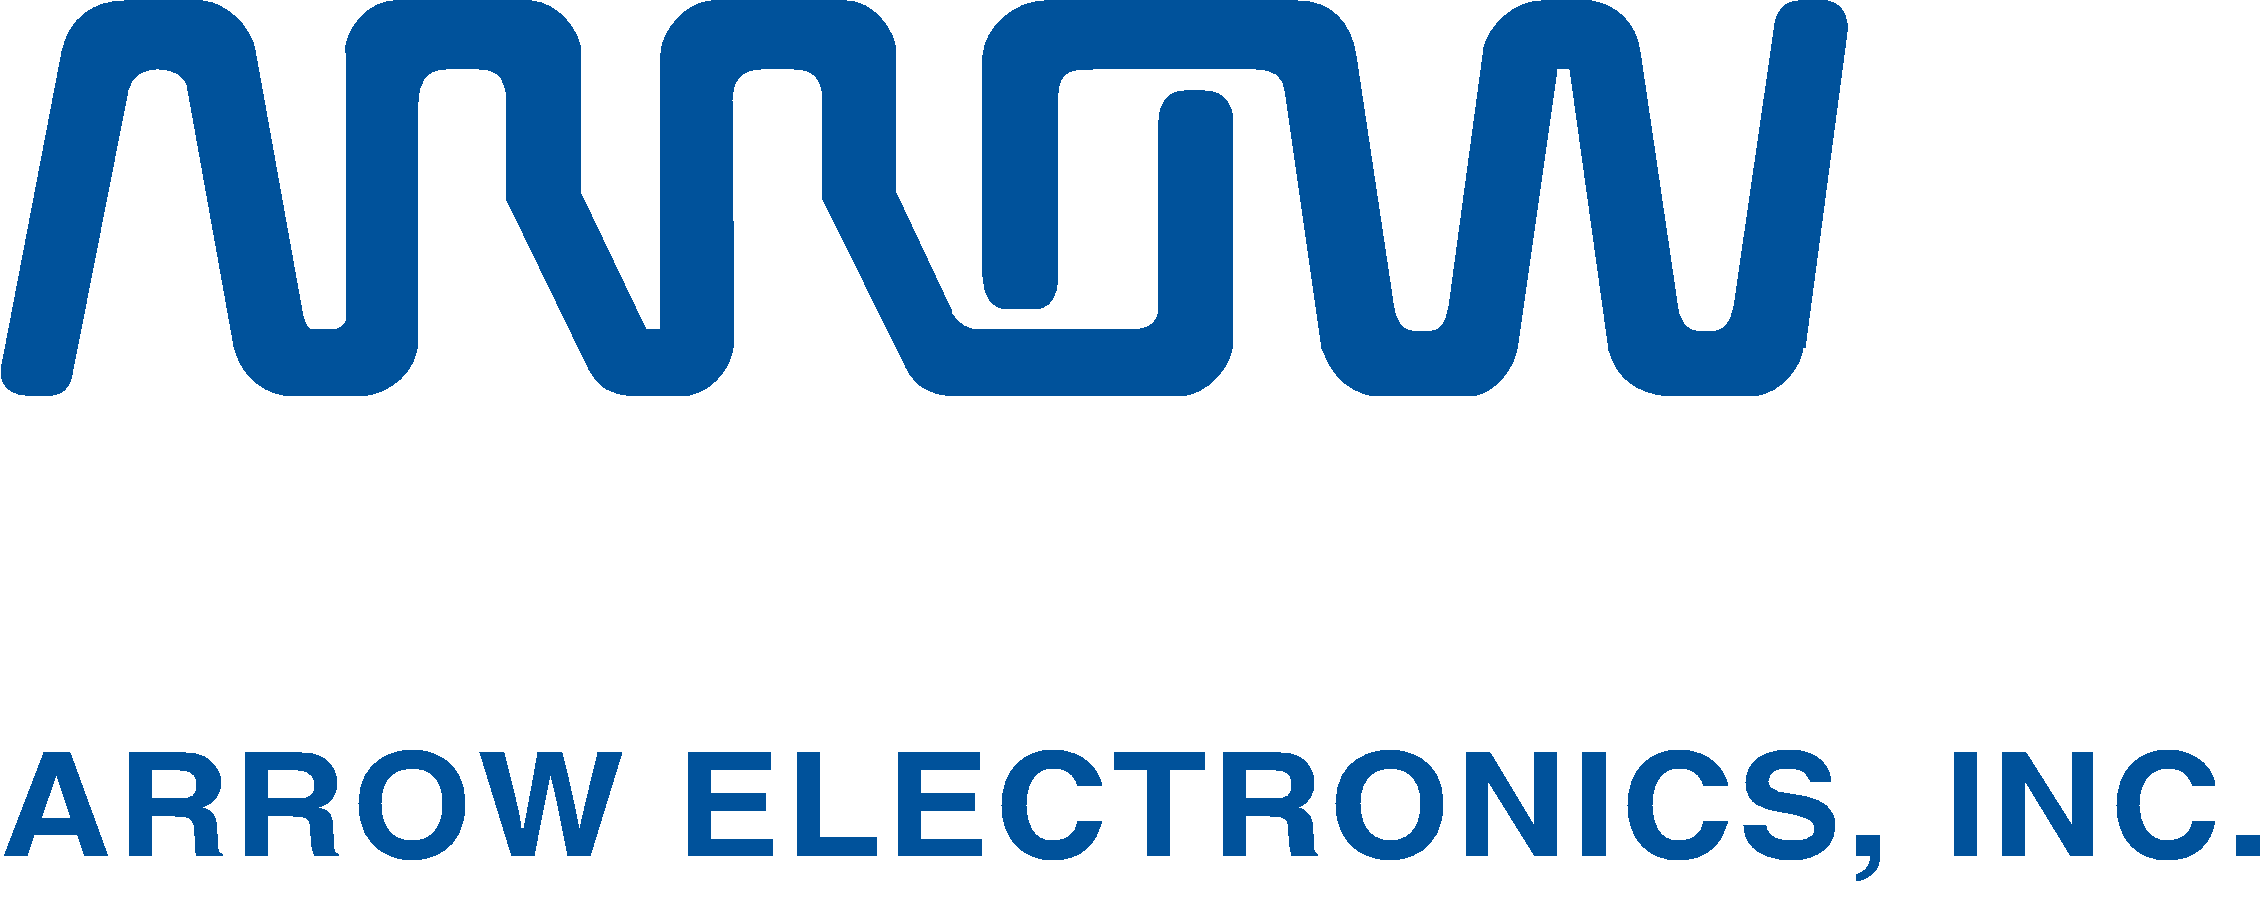 American Semiconductor Company Logo - Sales. GeneSiC Semiconductor, Inc